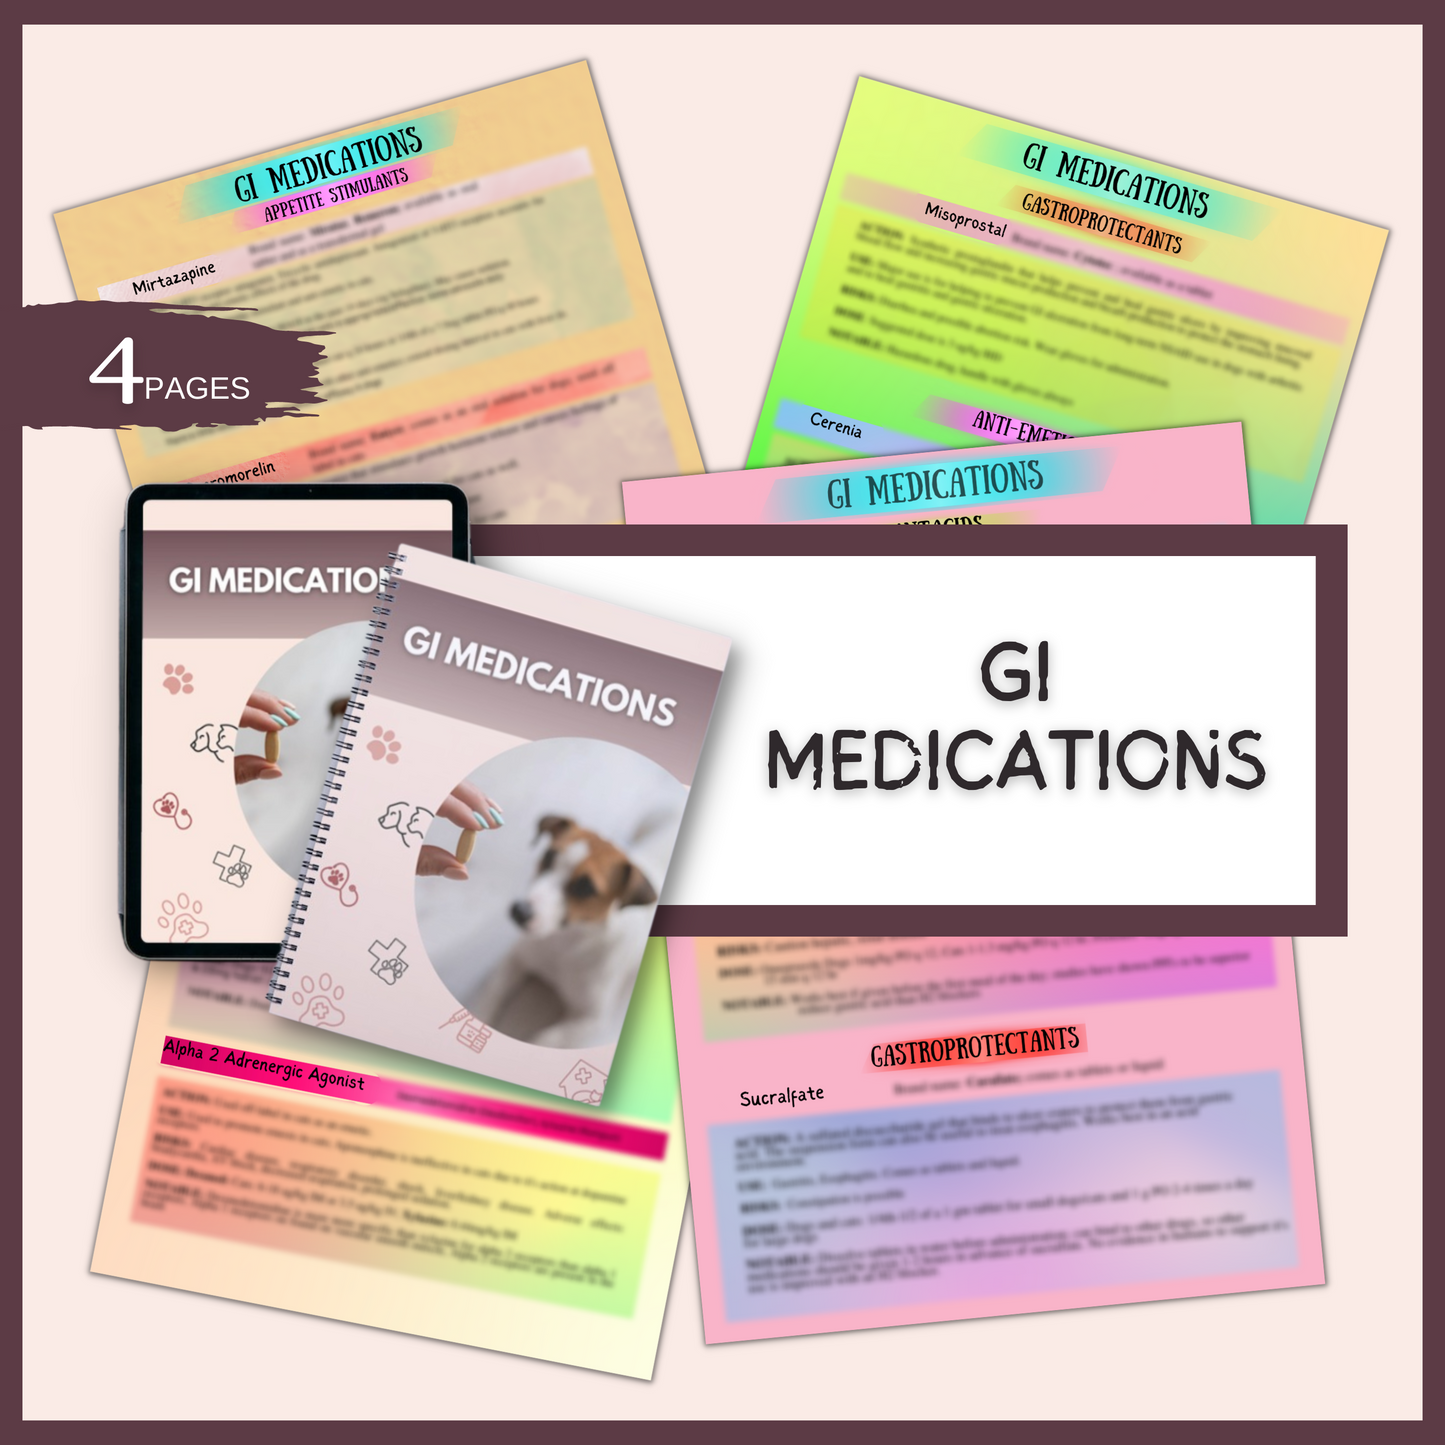 GI MEDICATIONS | 4 PAGES | 6 TOPICS